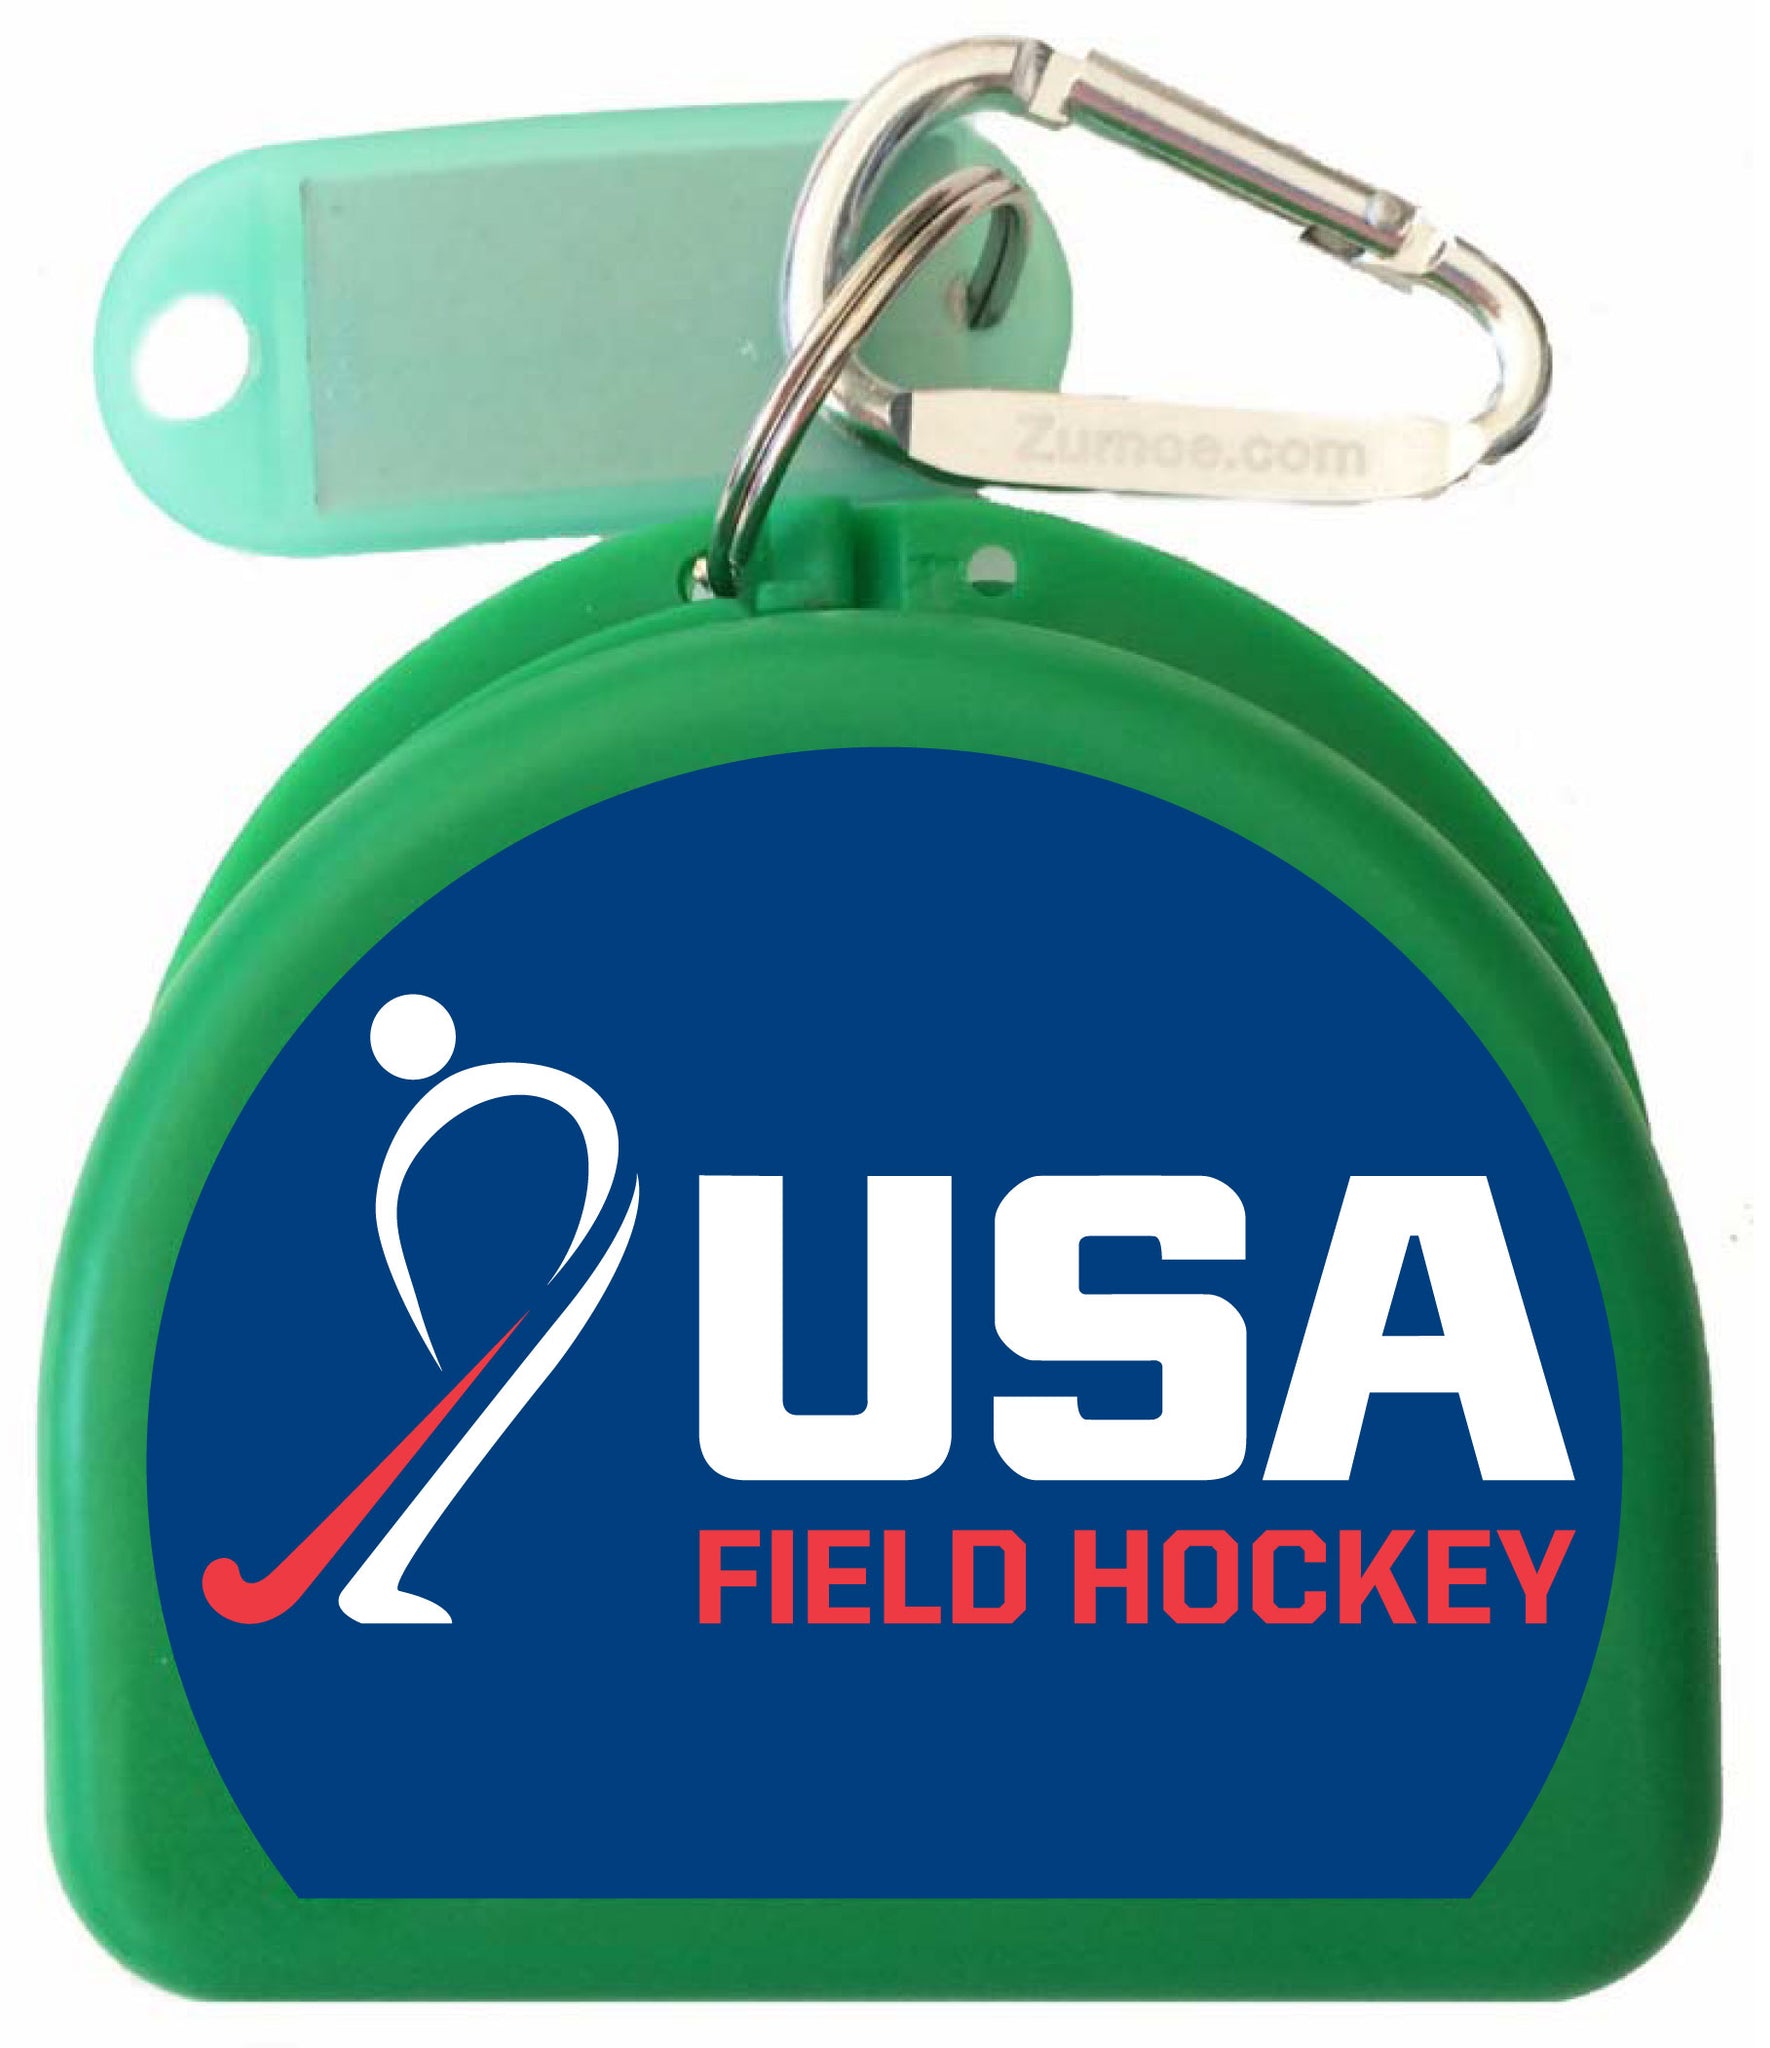 902 - USA Field Hockey Mouth Guard Case